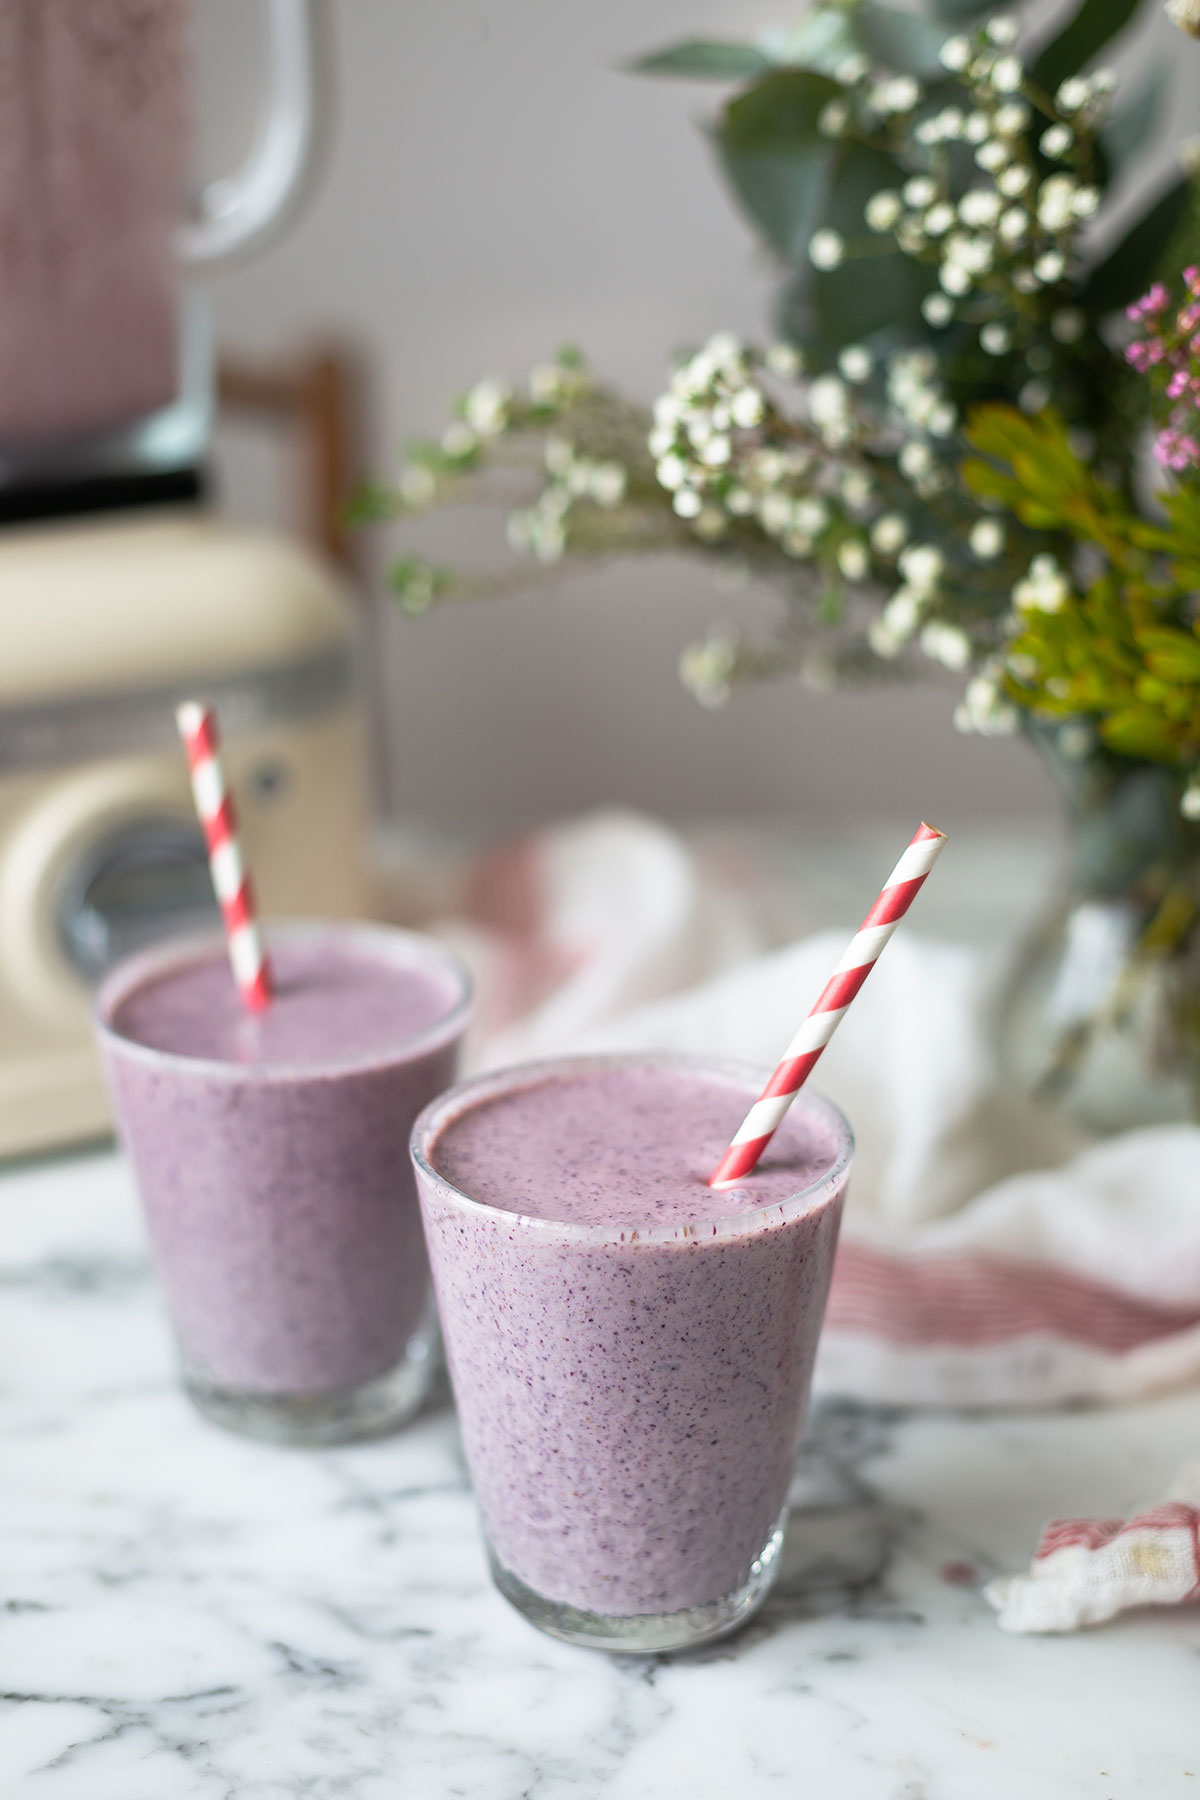 Healthy blueberry & banana protein smoothie recipe